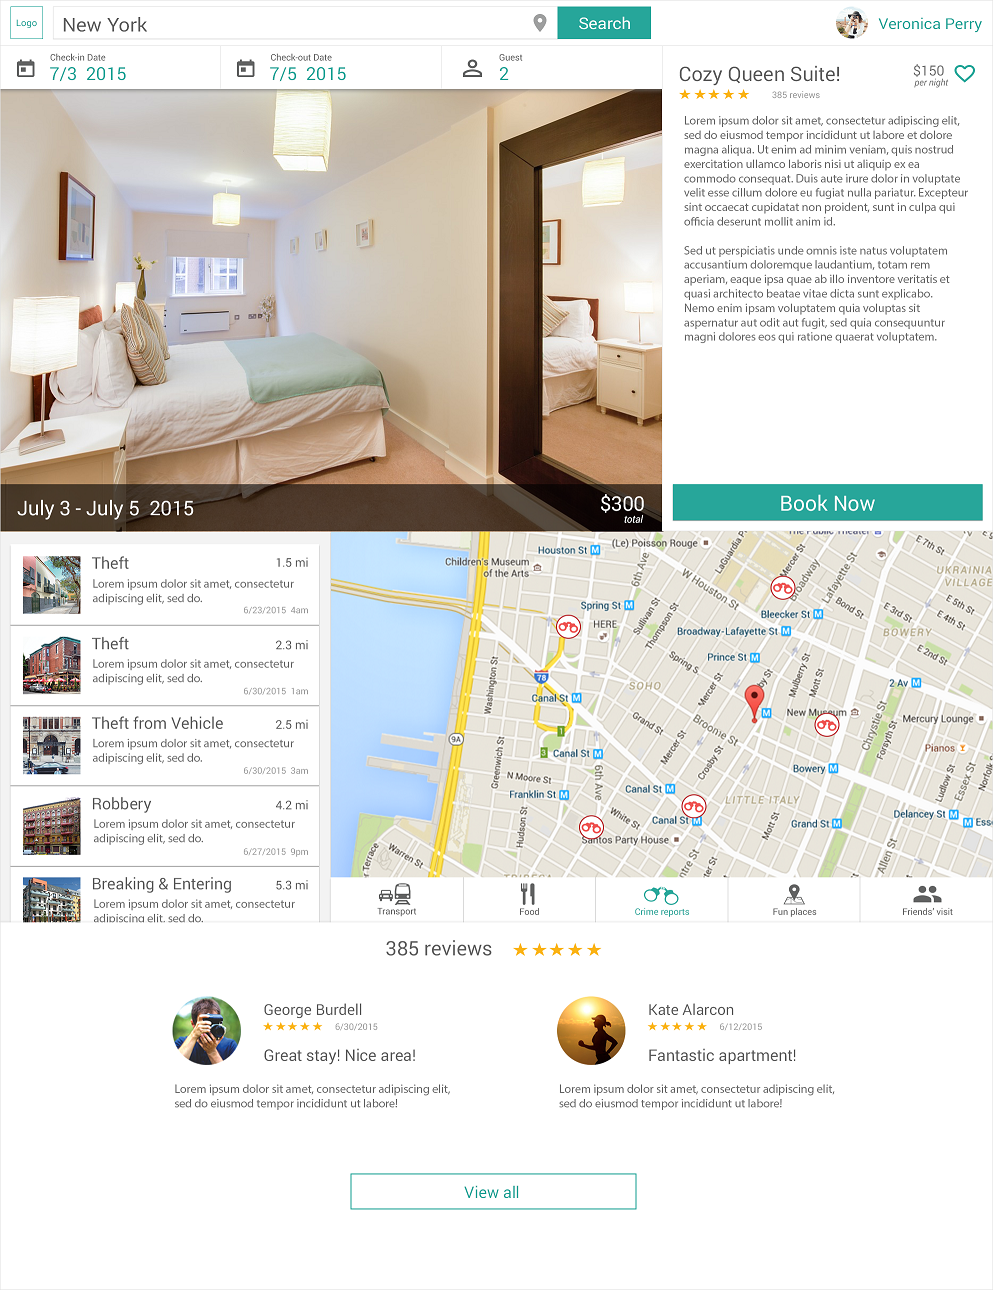 Hi-Fi mockup: Web design - specific apartment candidate